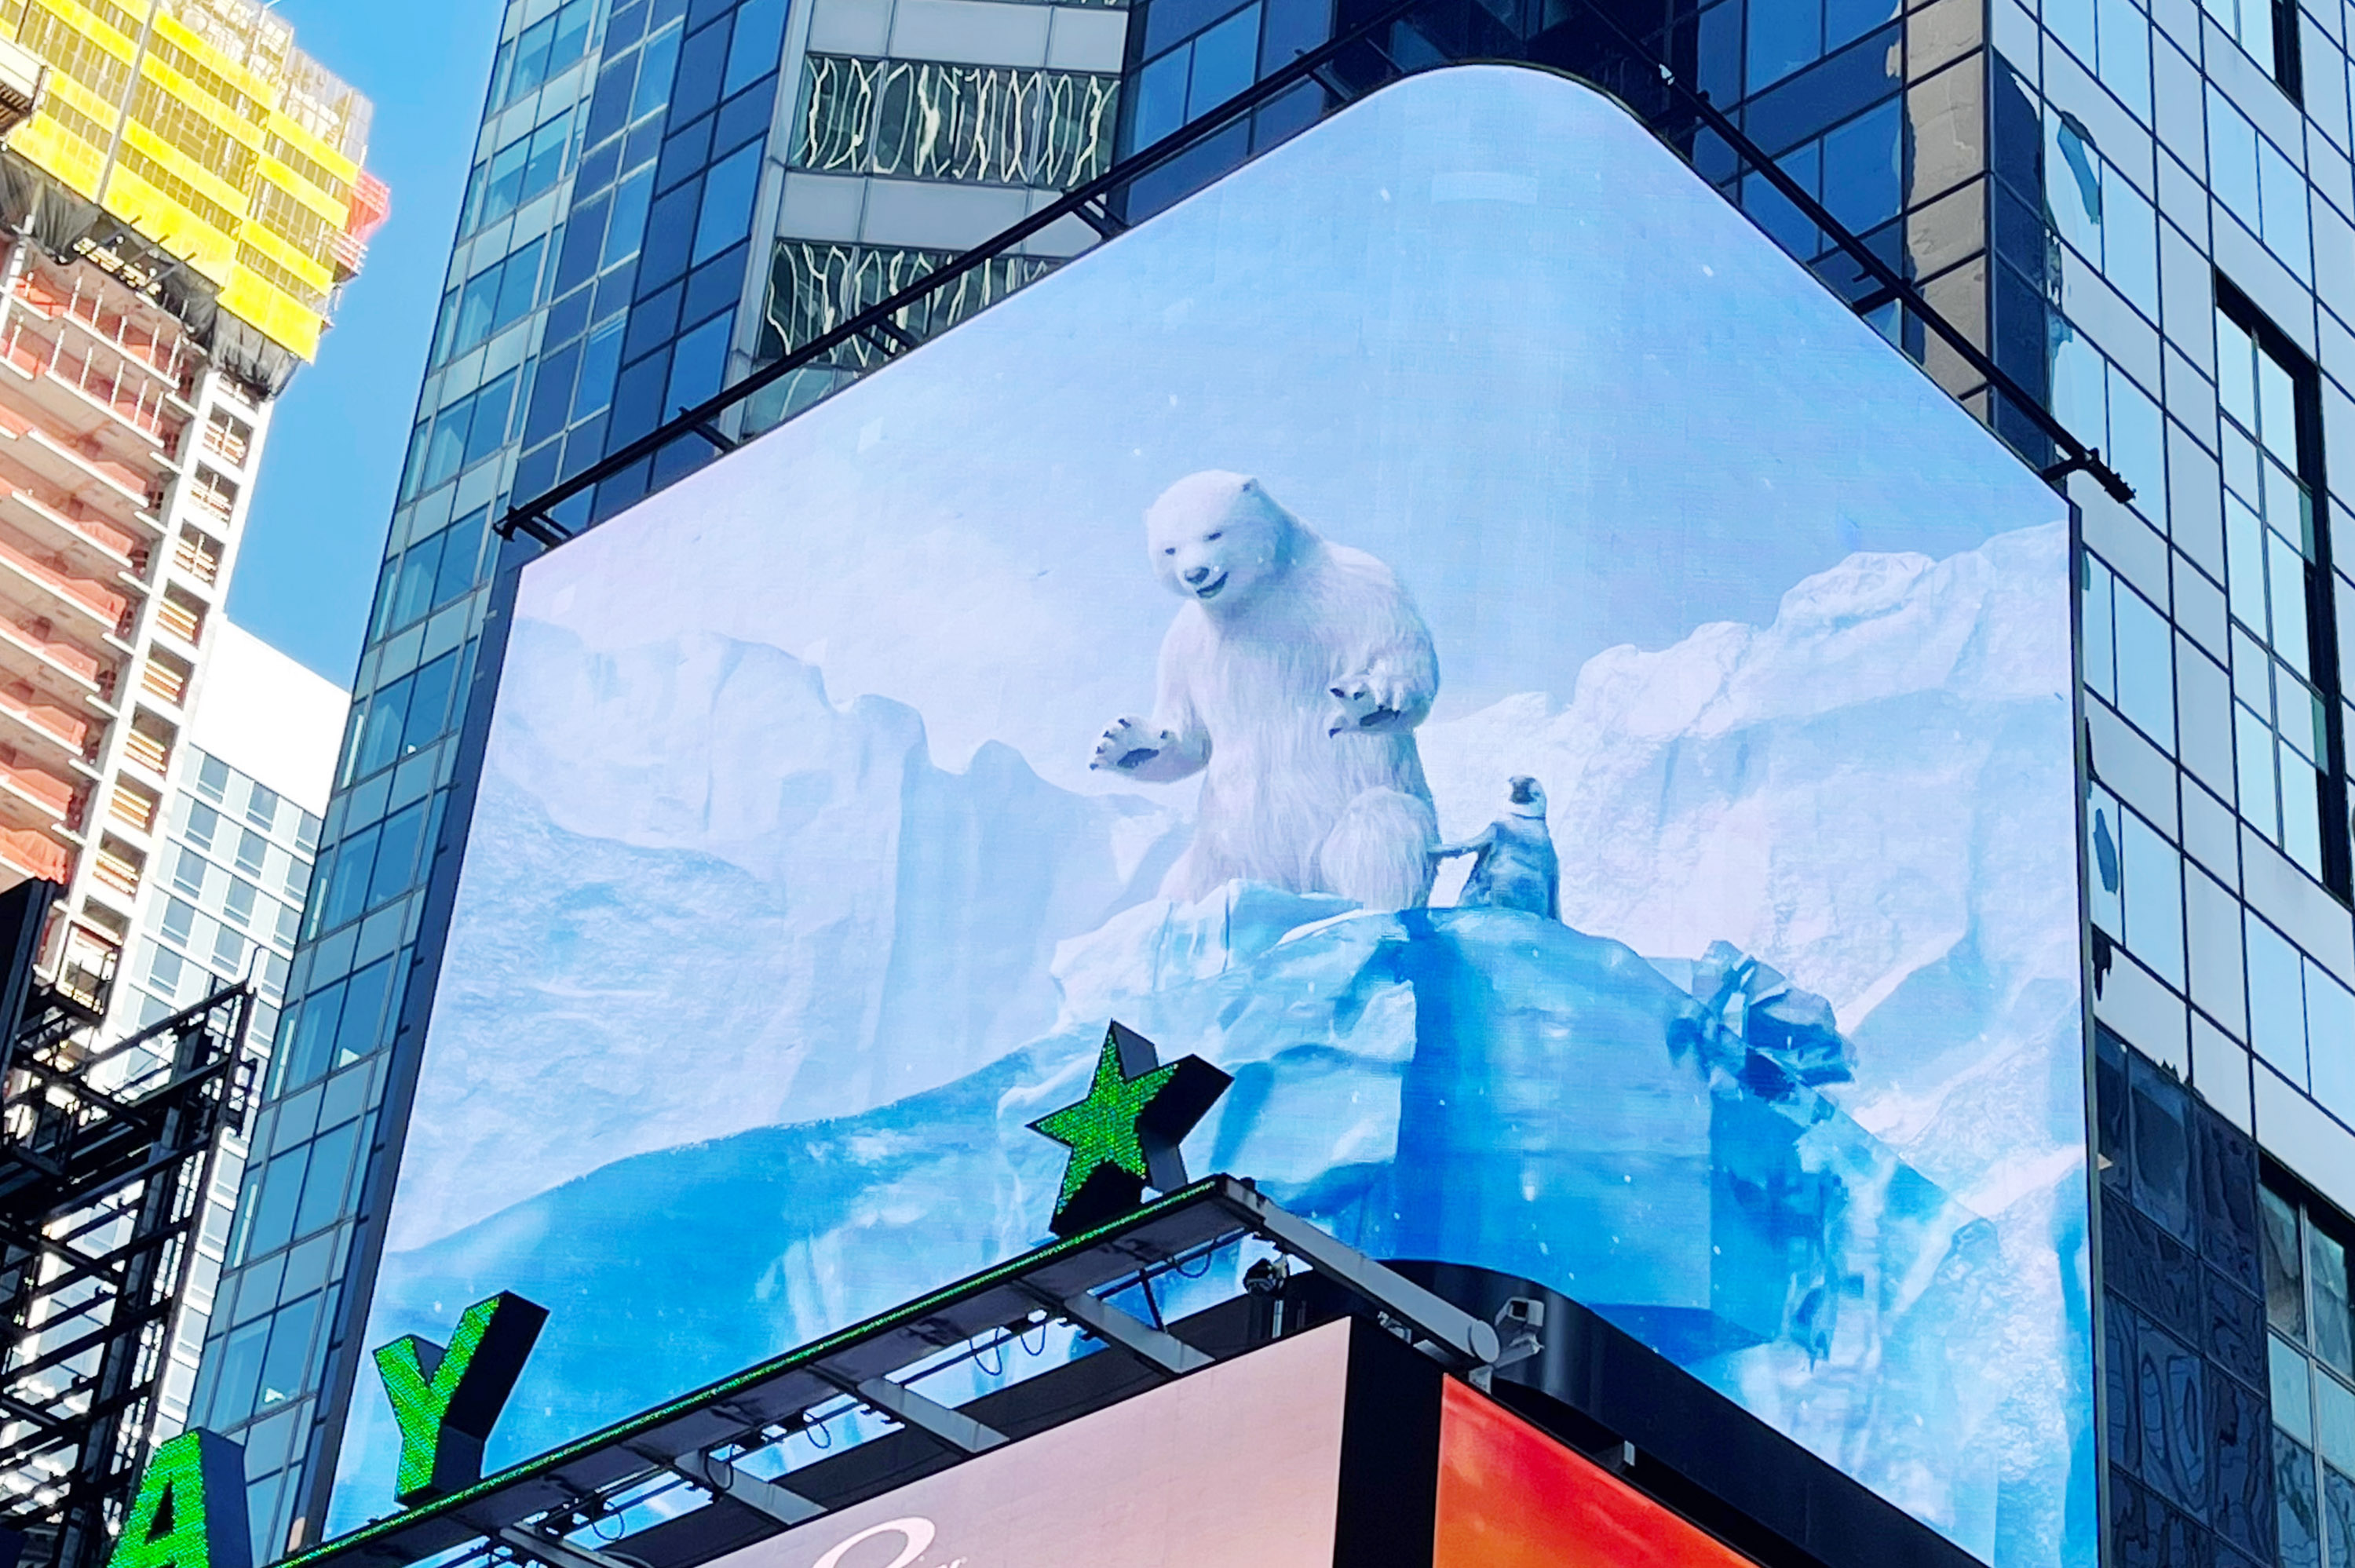 LG전자가 미국 뉴욕 타임스스퀘어 전광판에서 상영 중인 3D 콘텐츠. LG전자 제공